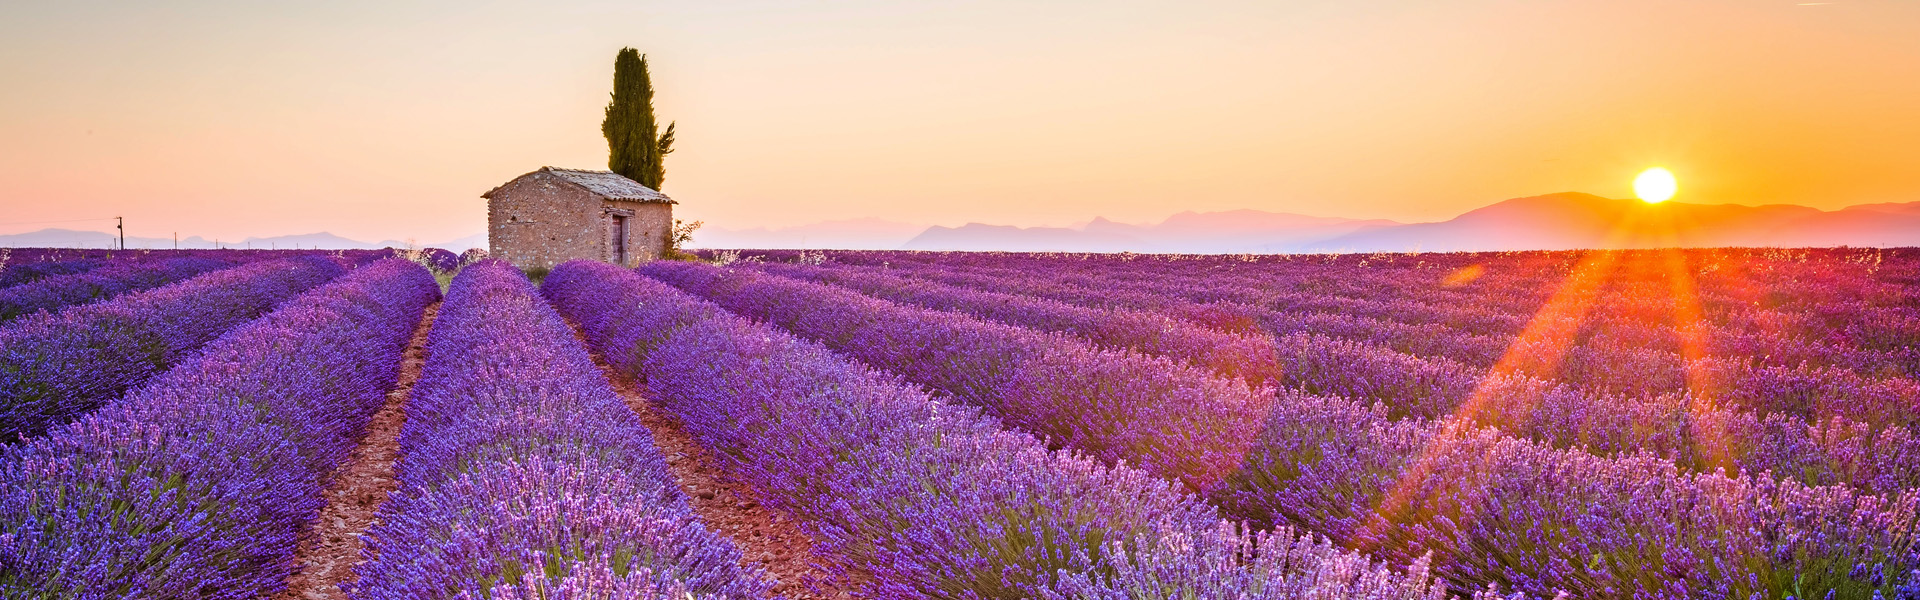 Valensole, Provence, France. Lavender field full of purple flowe